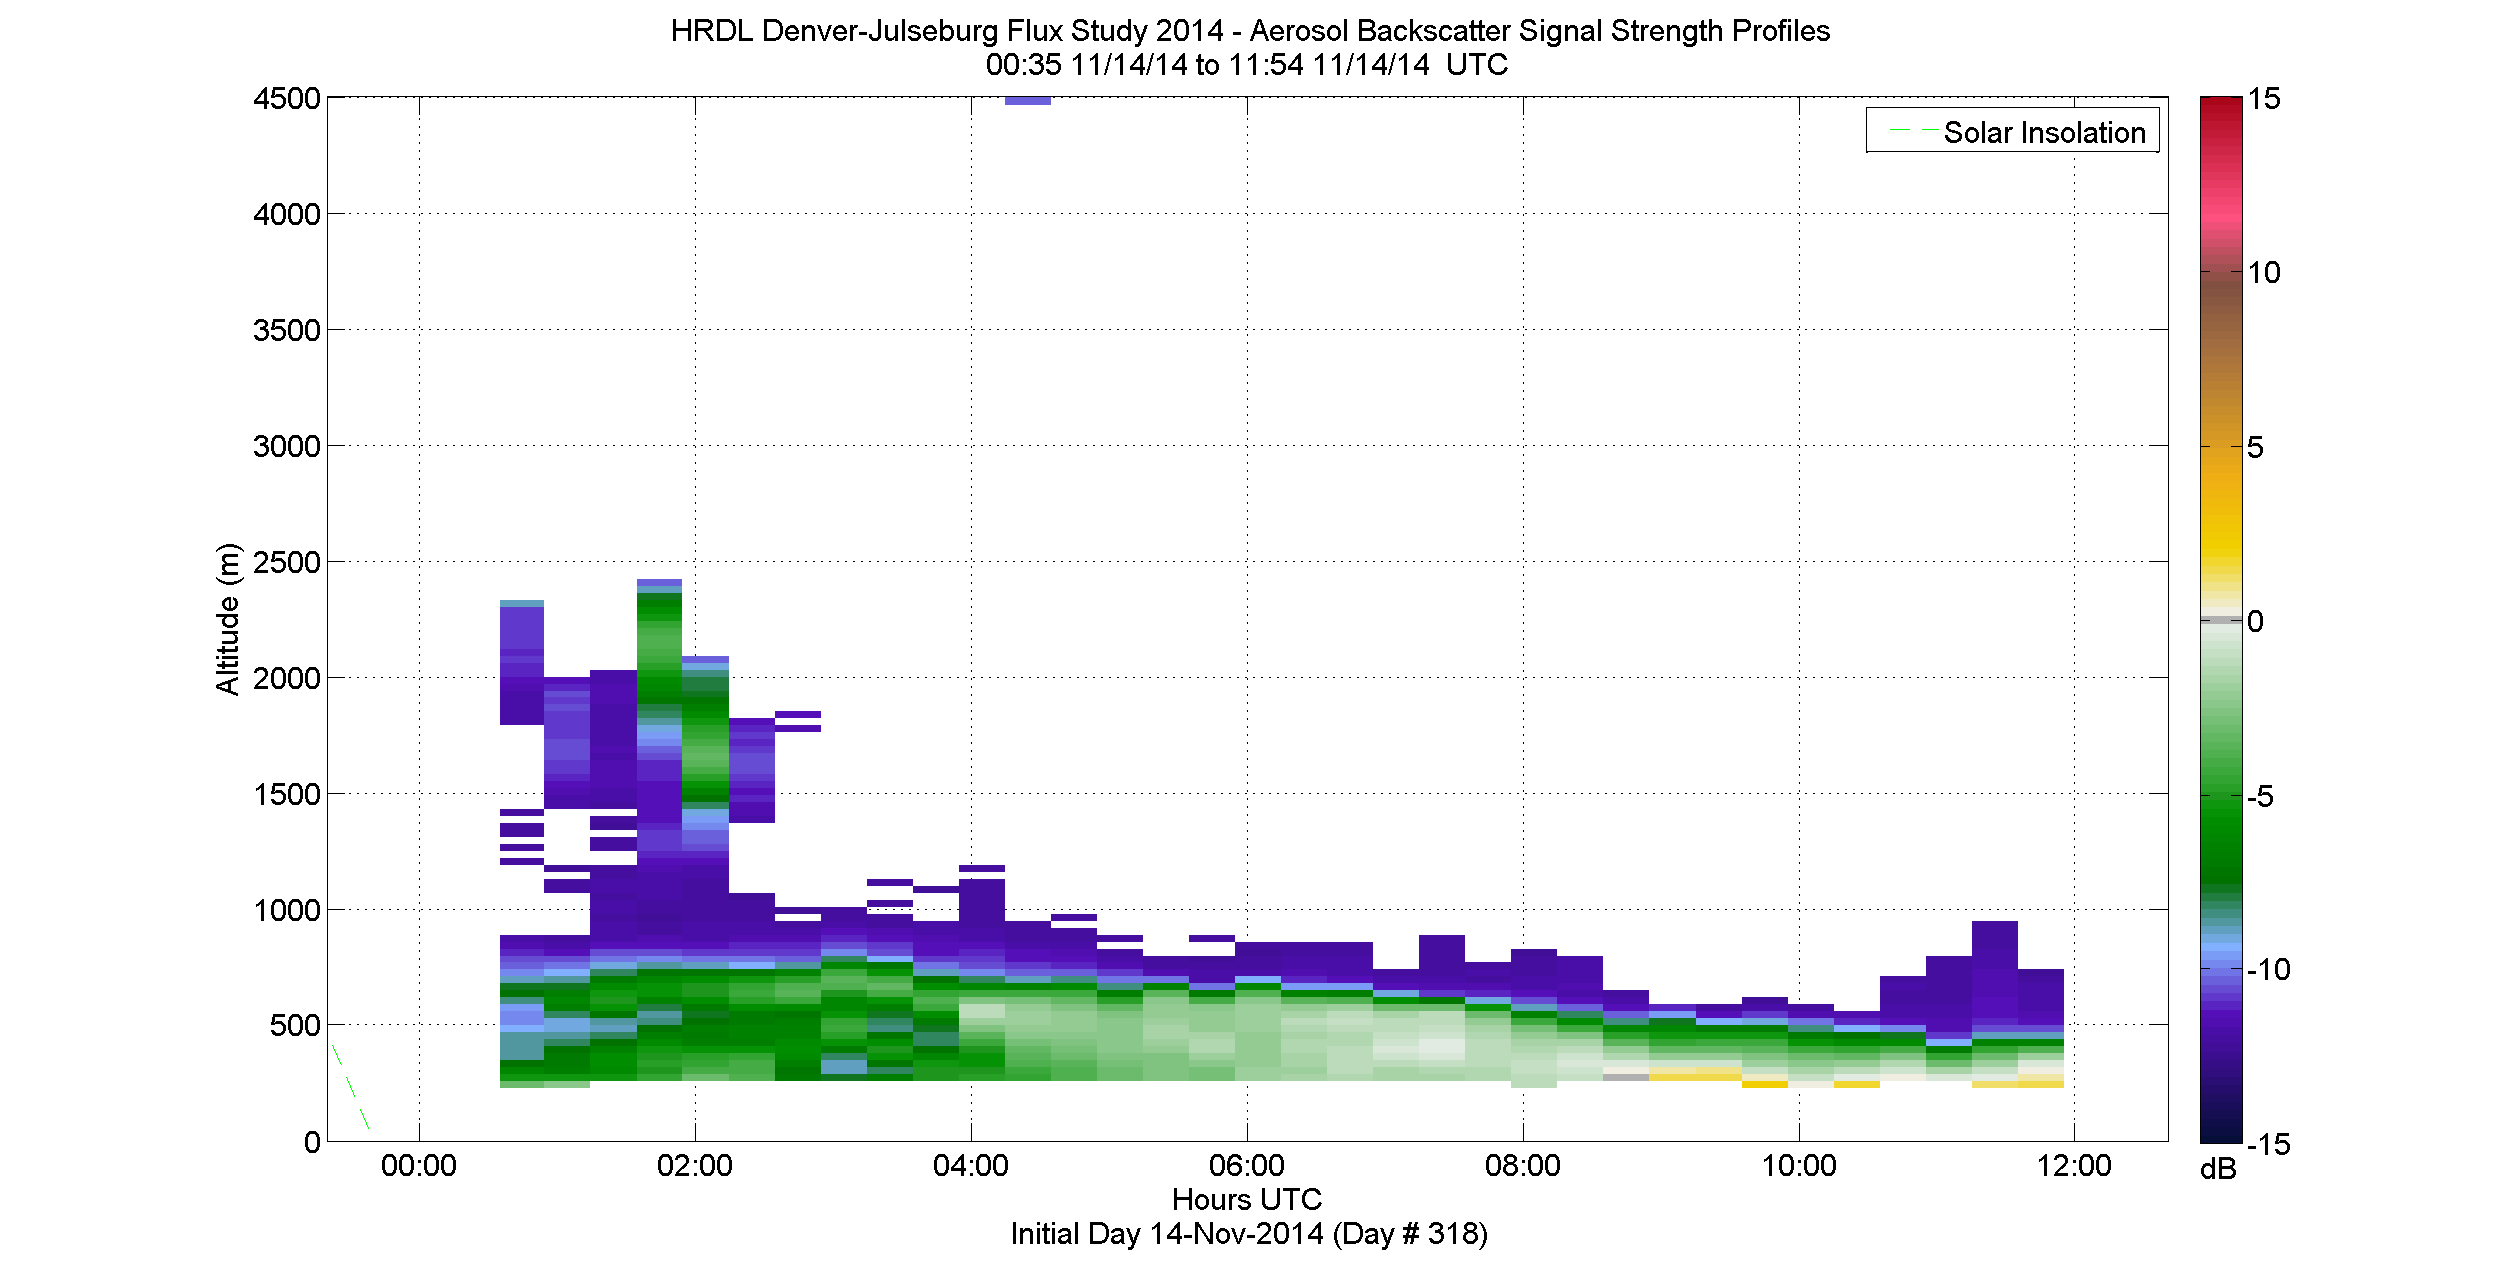 HRDL vertical intensity profile - November 14 am